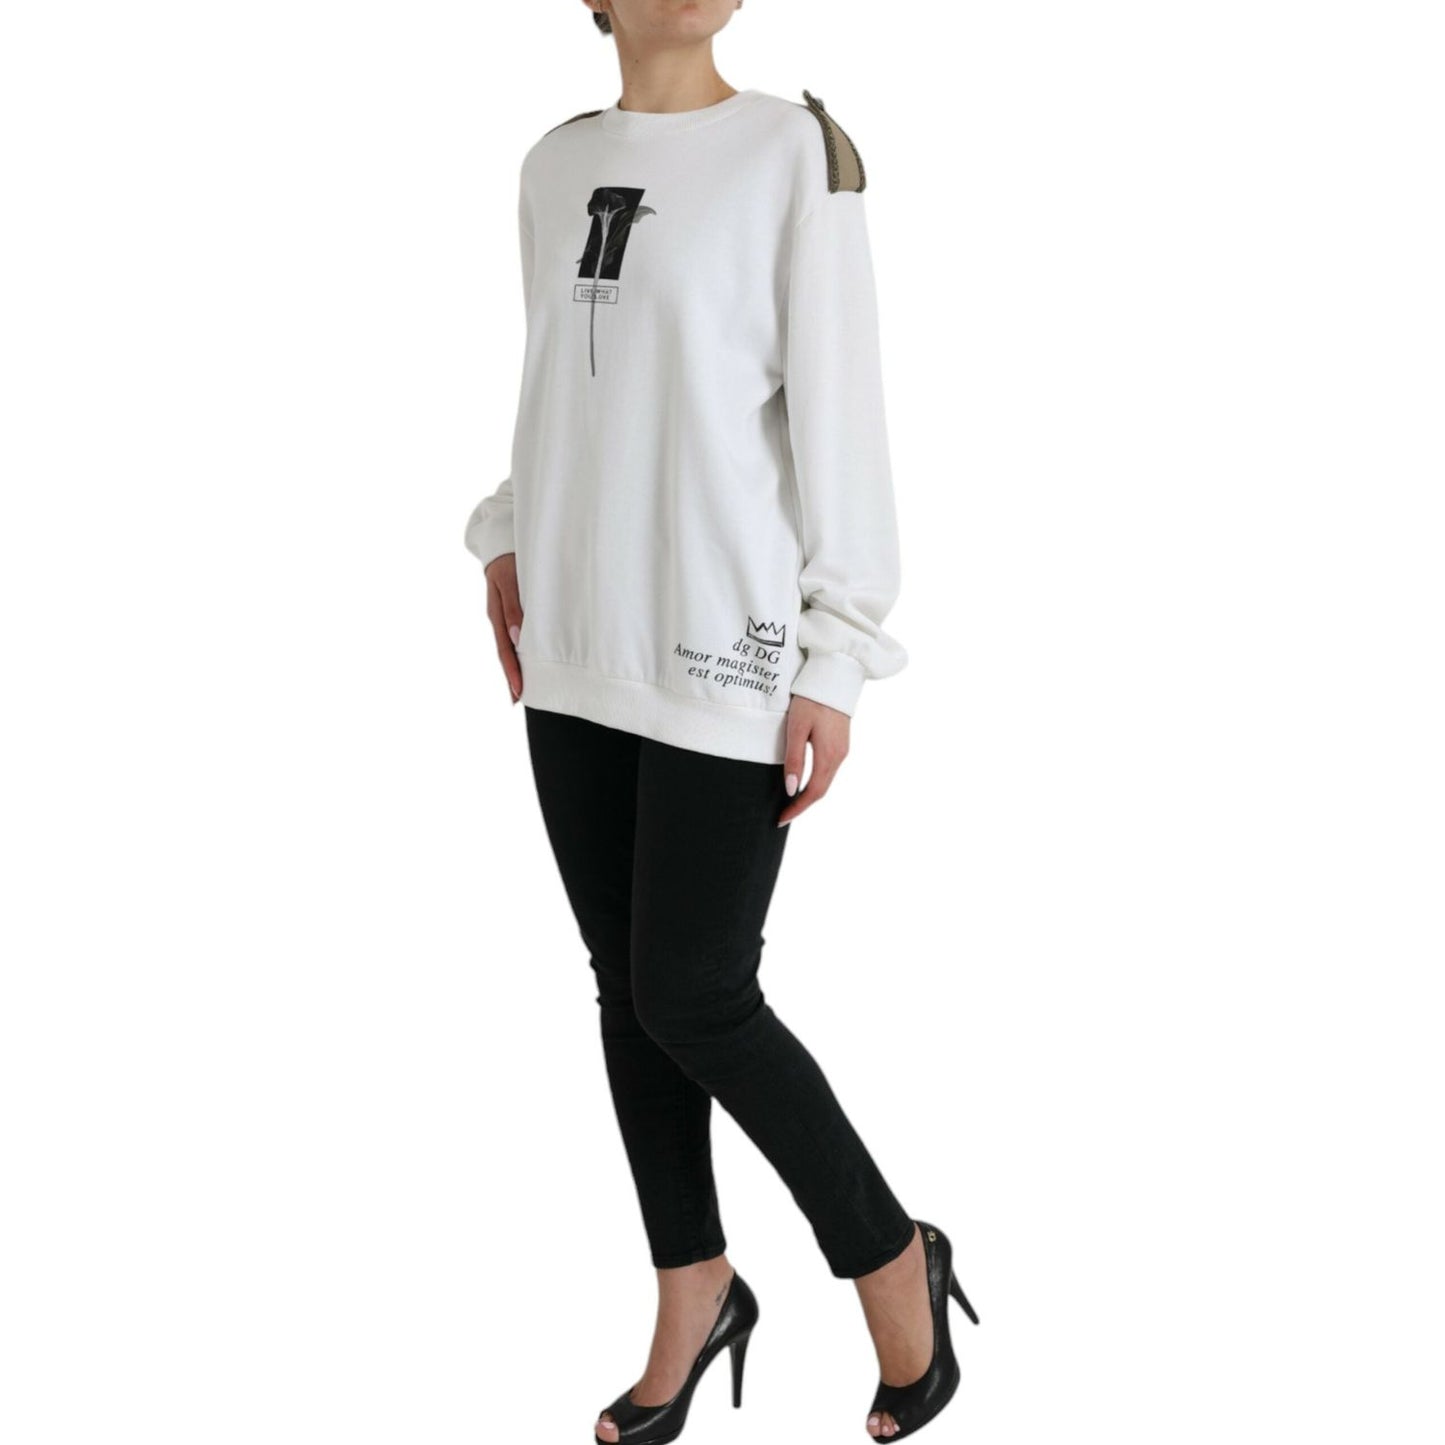 Dolce & Gabbana Chic Black and White Crew Neck Sweater chic-black-and-white-crew-neck-sweater